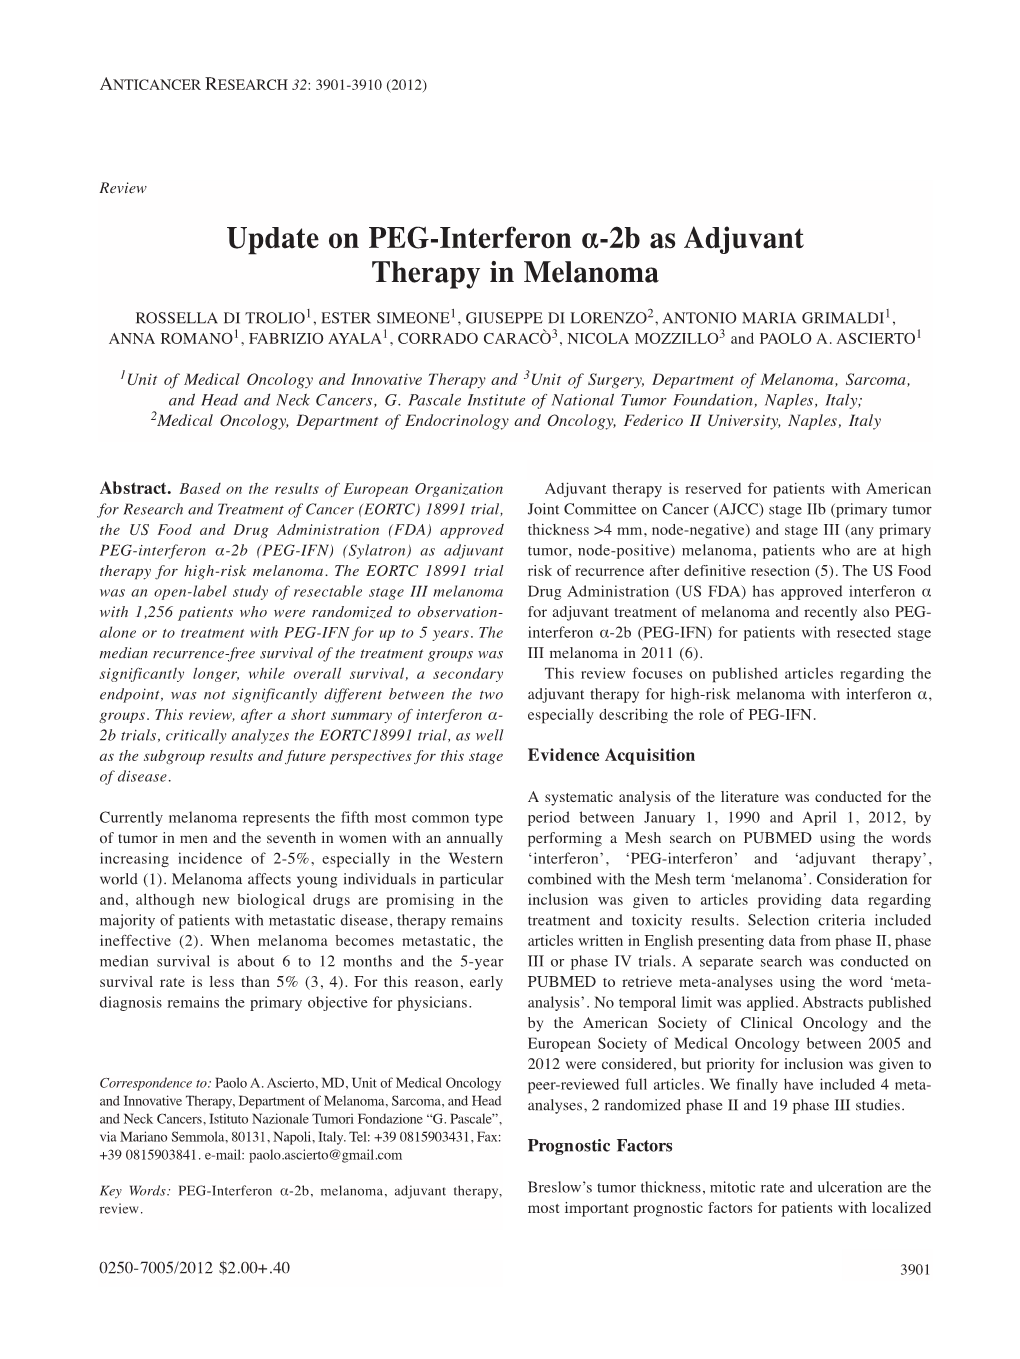 Update on PEG-Interferon Α-2B As Adjuvant Therapy in Melanoma